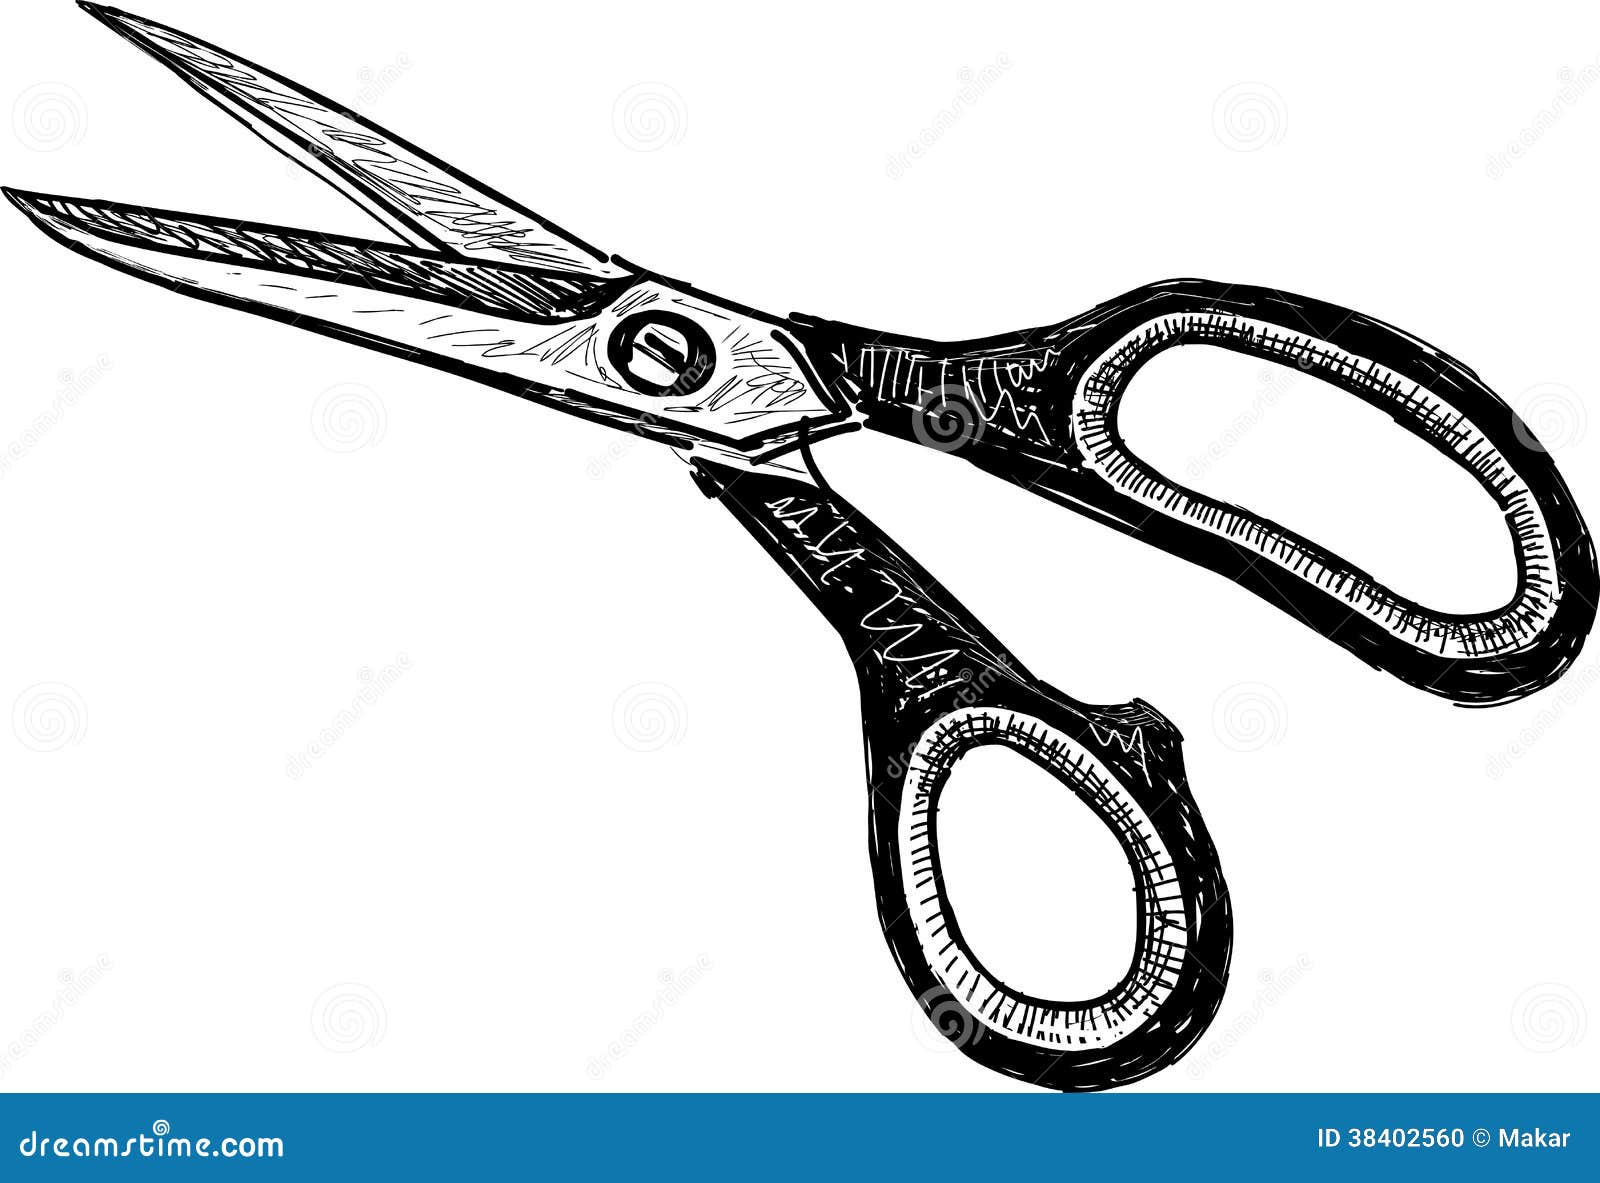 Hair Cutting Shears Barber Scissors Sketch Stock Vector (Royalty Free)  1881390559 | Shutterstock